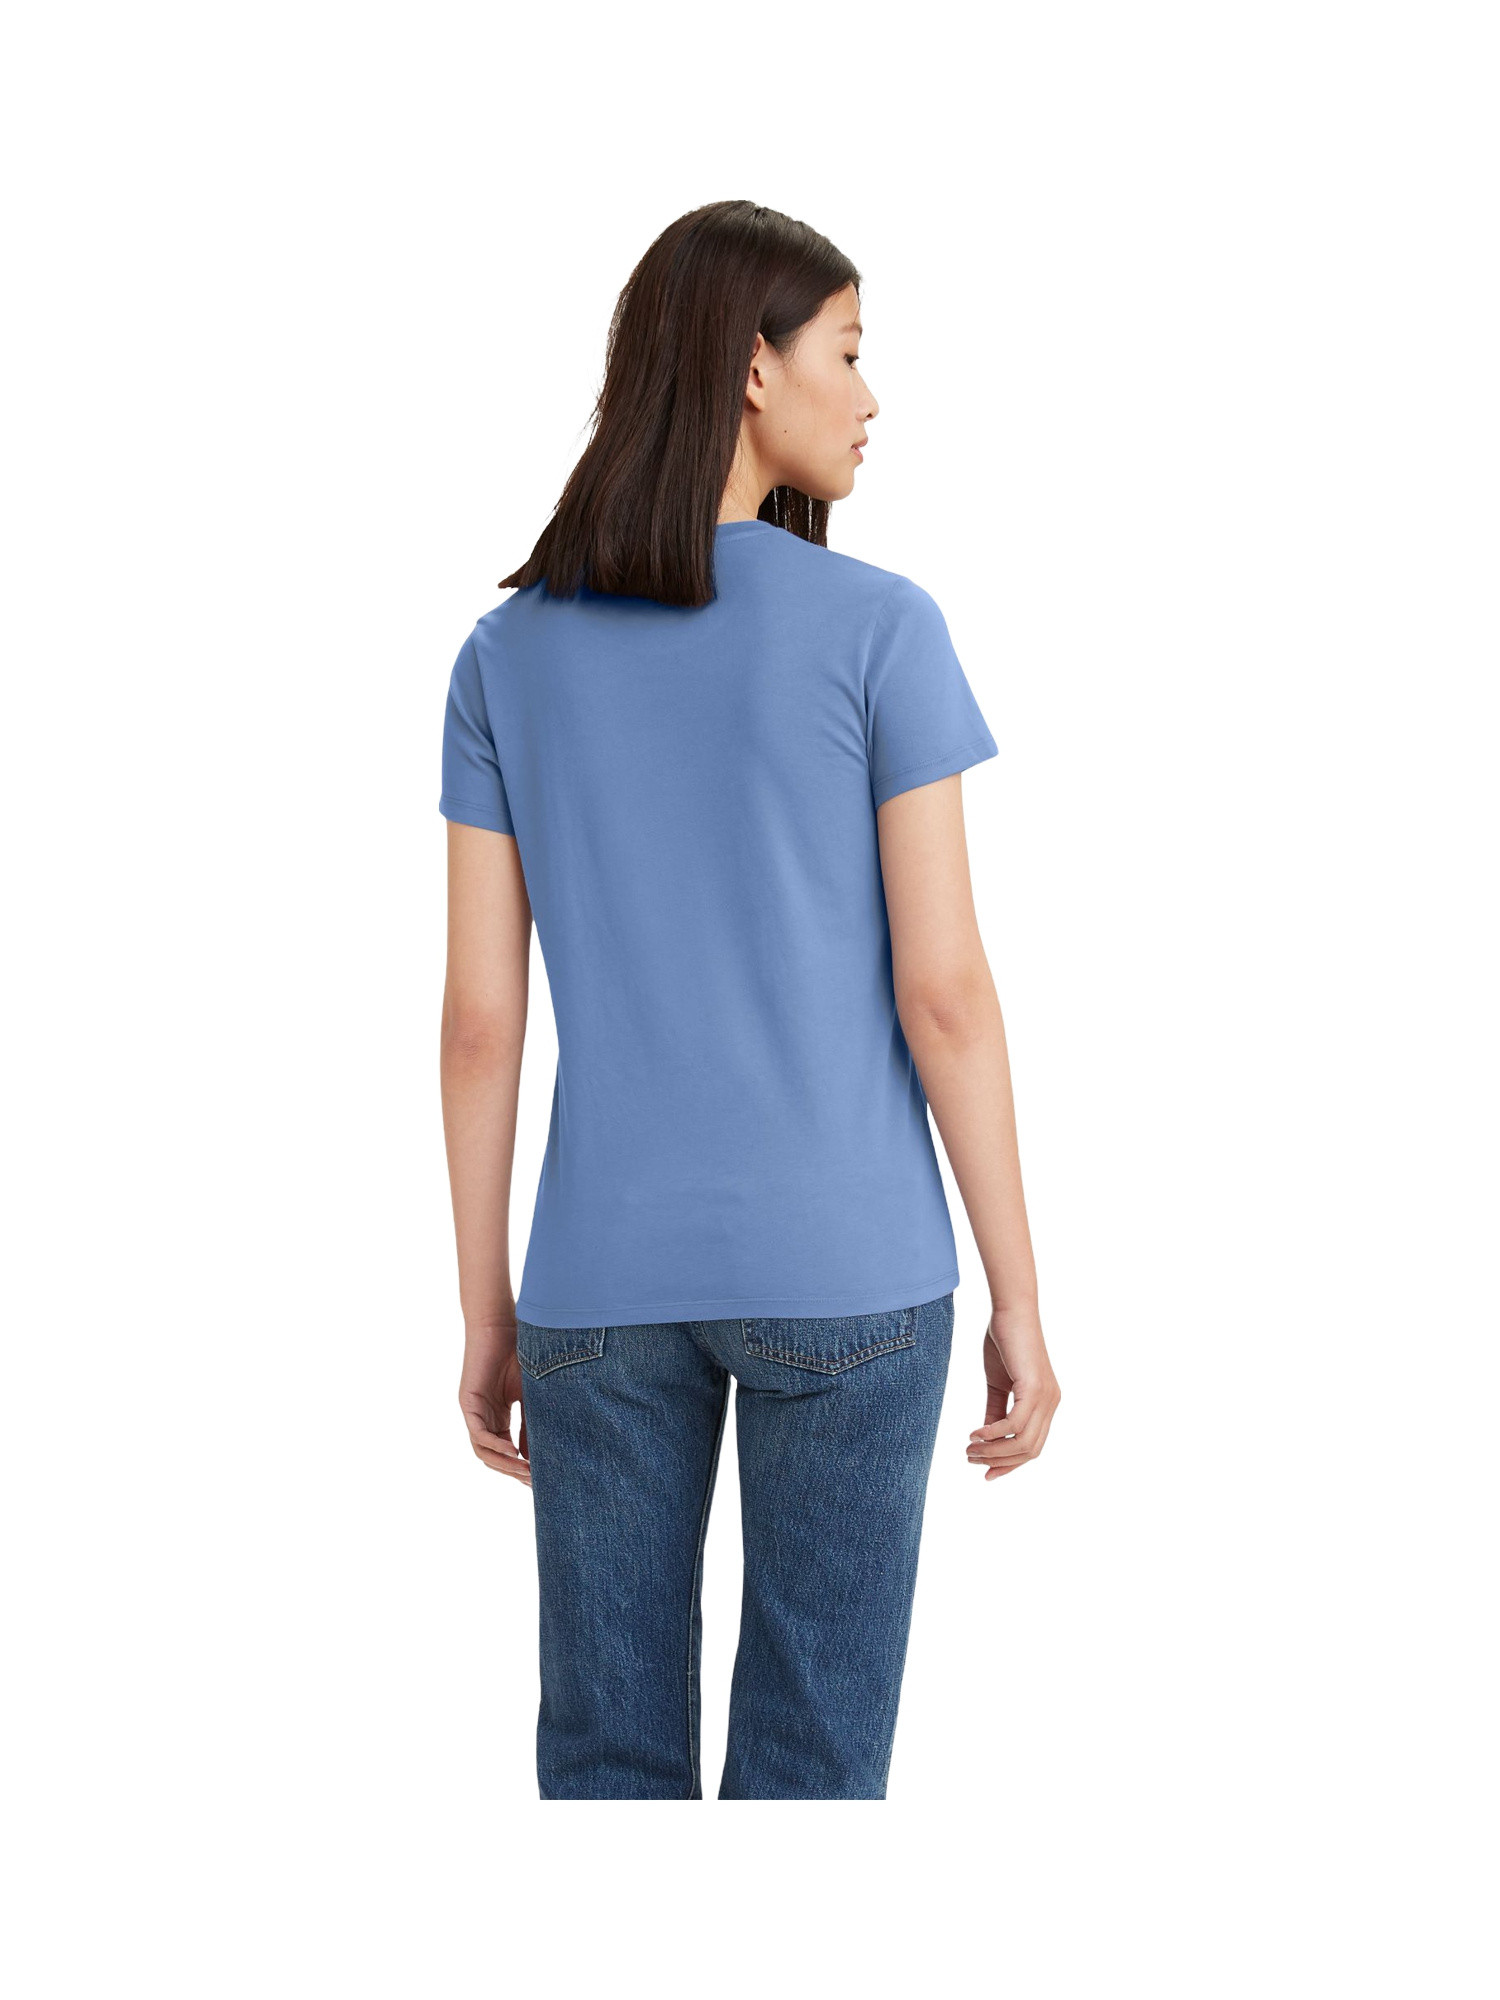 Levi's - T-shirt con logo floreale, Azzurro, large image number 3